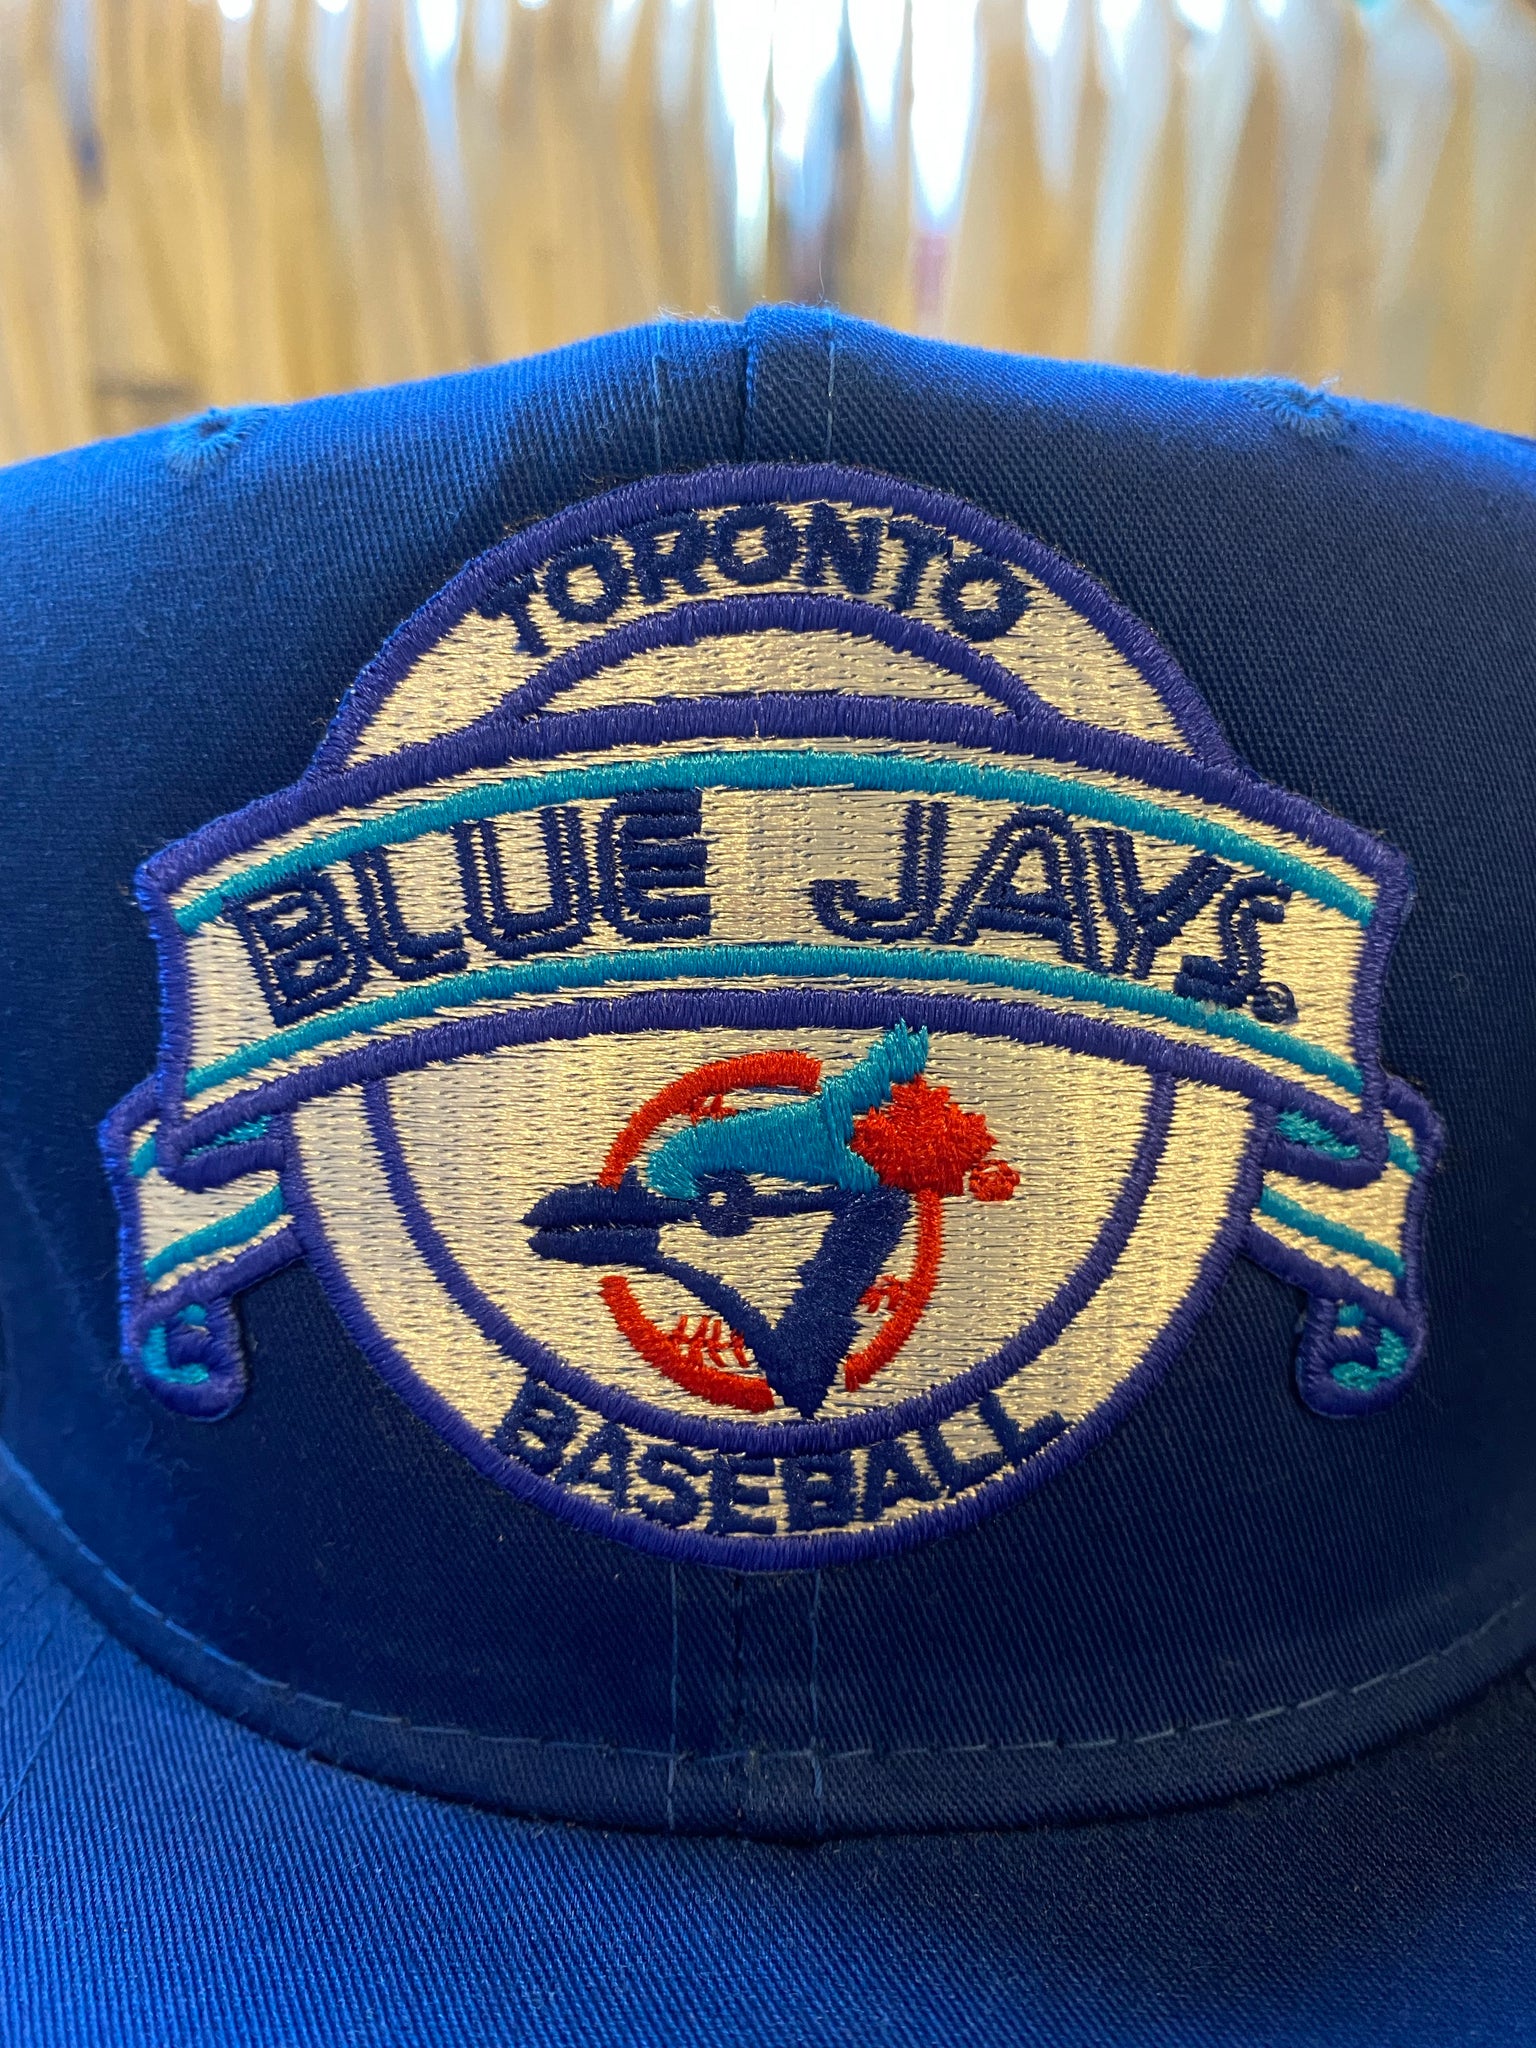 Toronto Blue Jays Vintage in Toronto Blue Jays Team Shop 